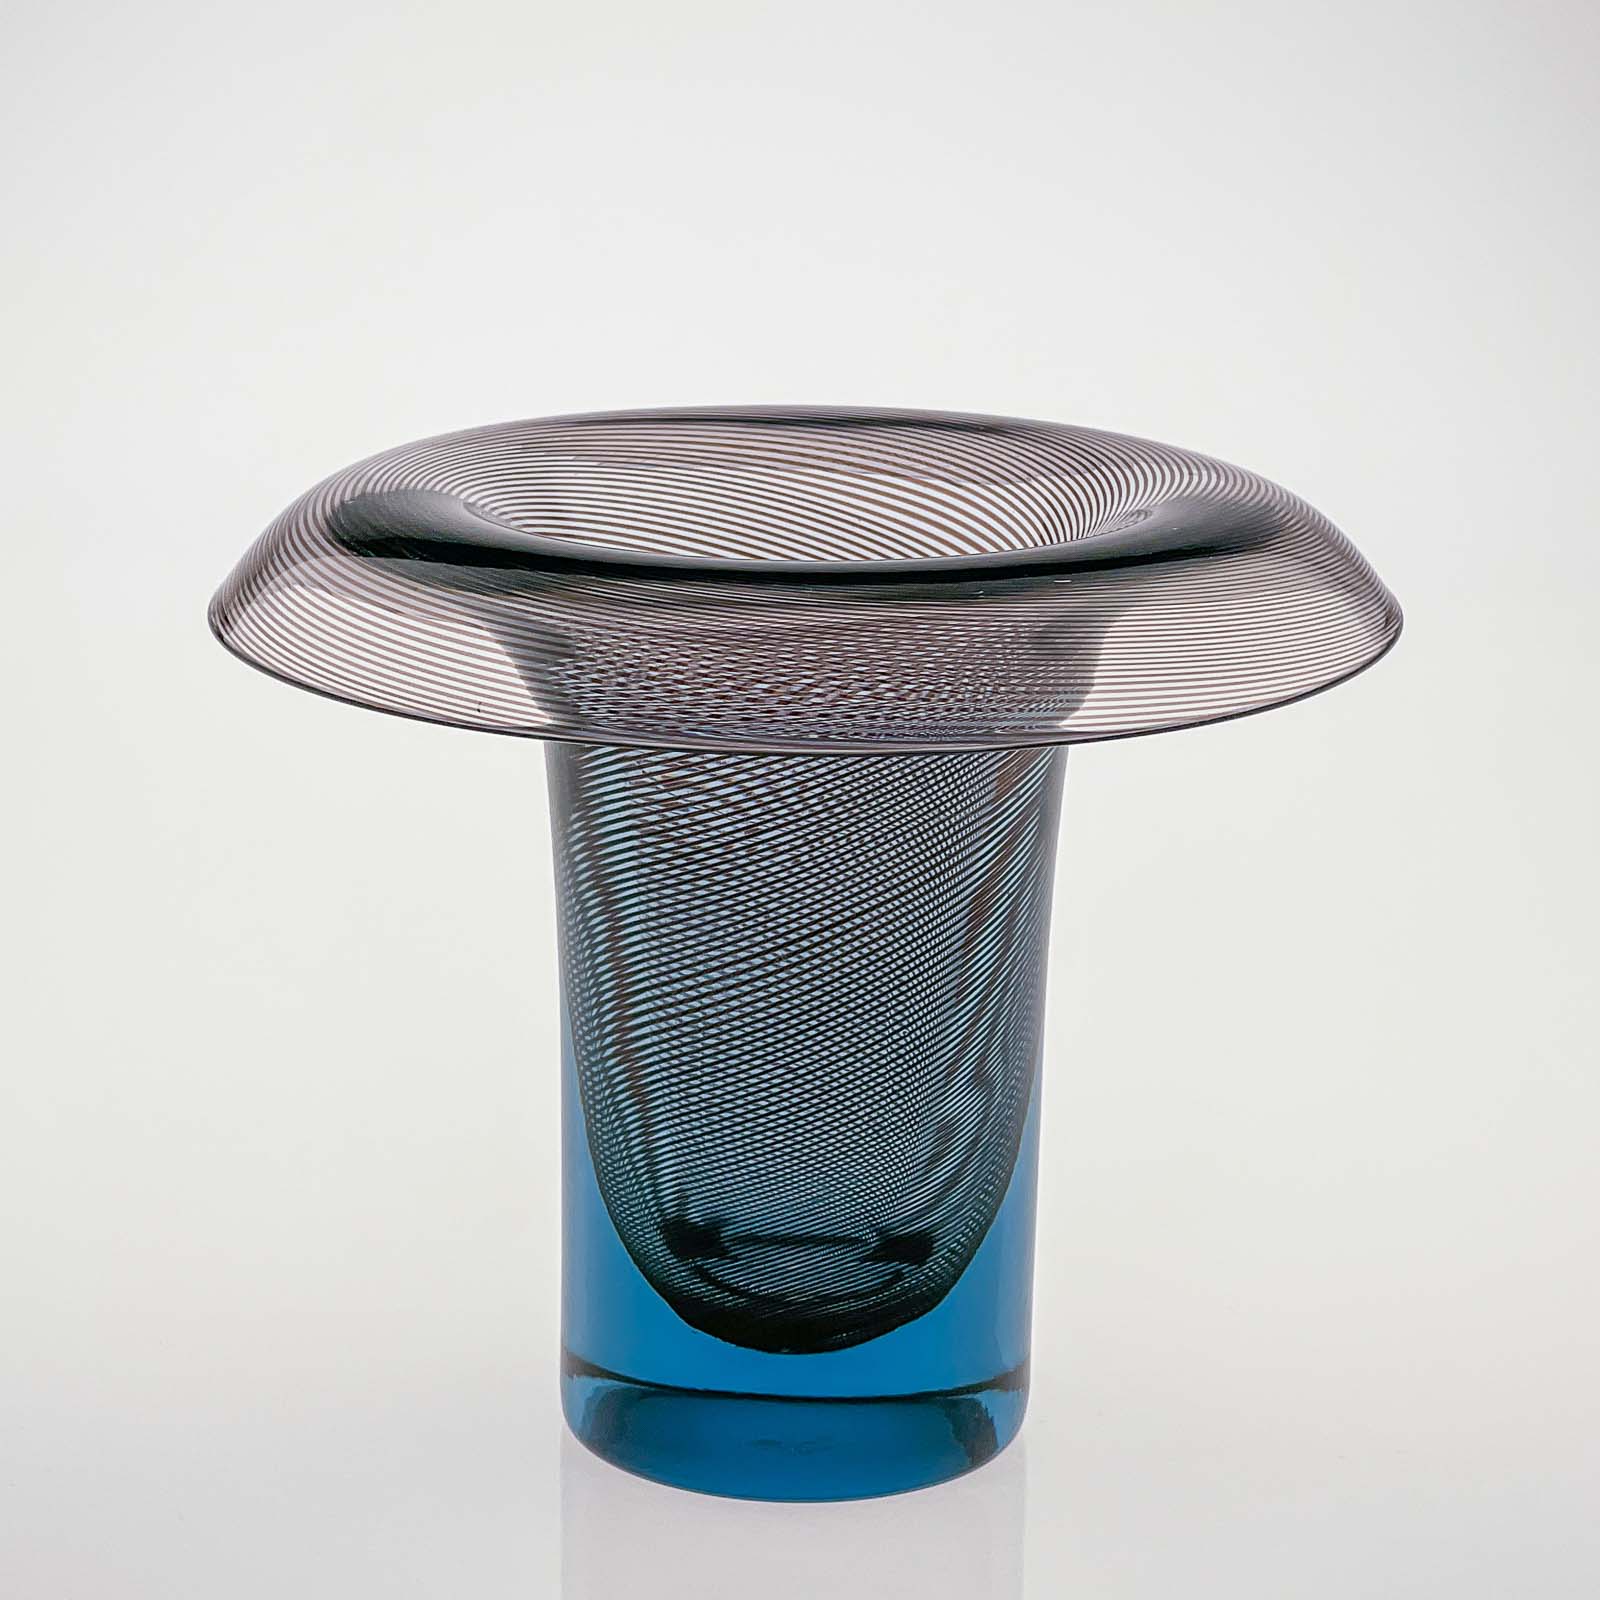 Tapio Wirkkala - A glass Art-object "Medusa", model 501.2 - Venini, Italy circa 1966